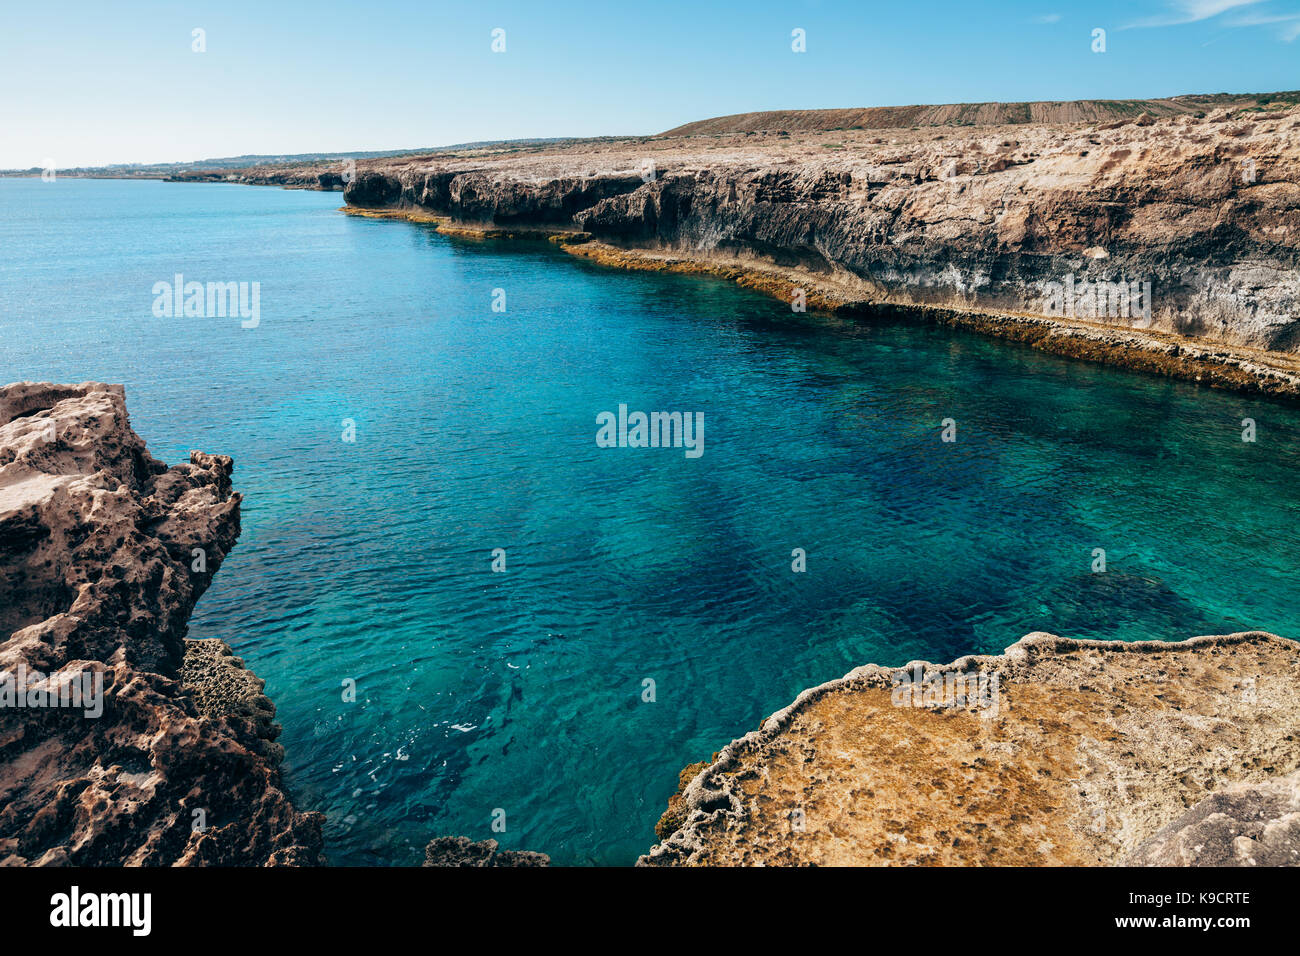 Azul turquesa del mar mediterráneo, en la costa de Cape Greco en Chipre la belleza de la naturaleza. Foto de stock